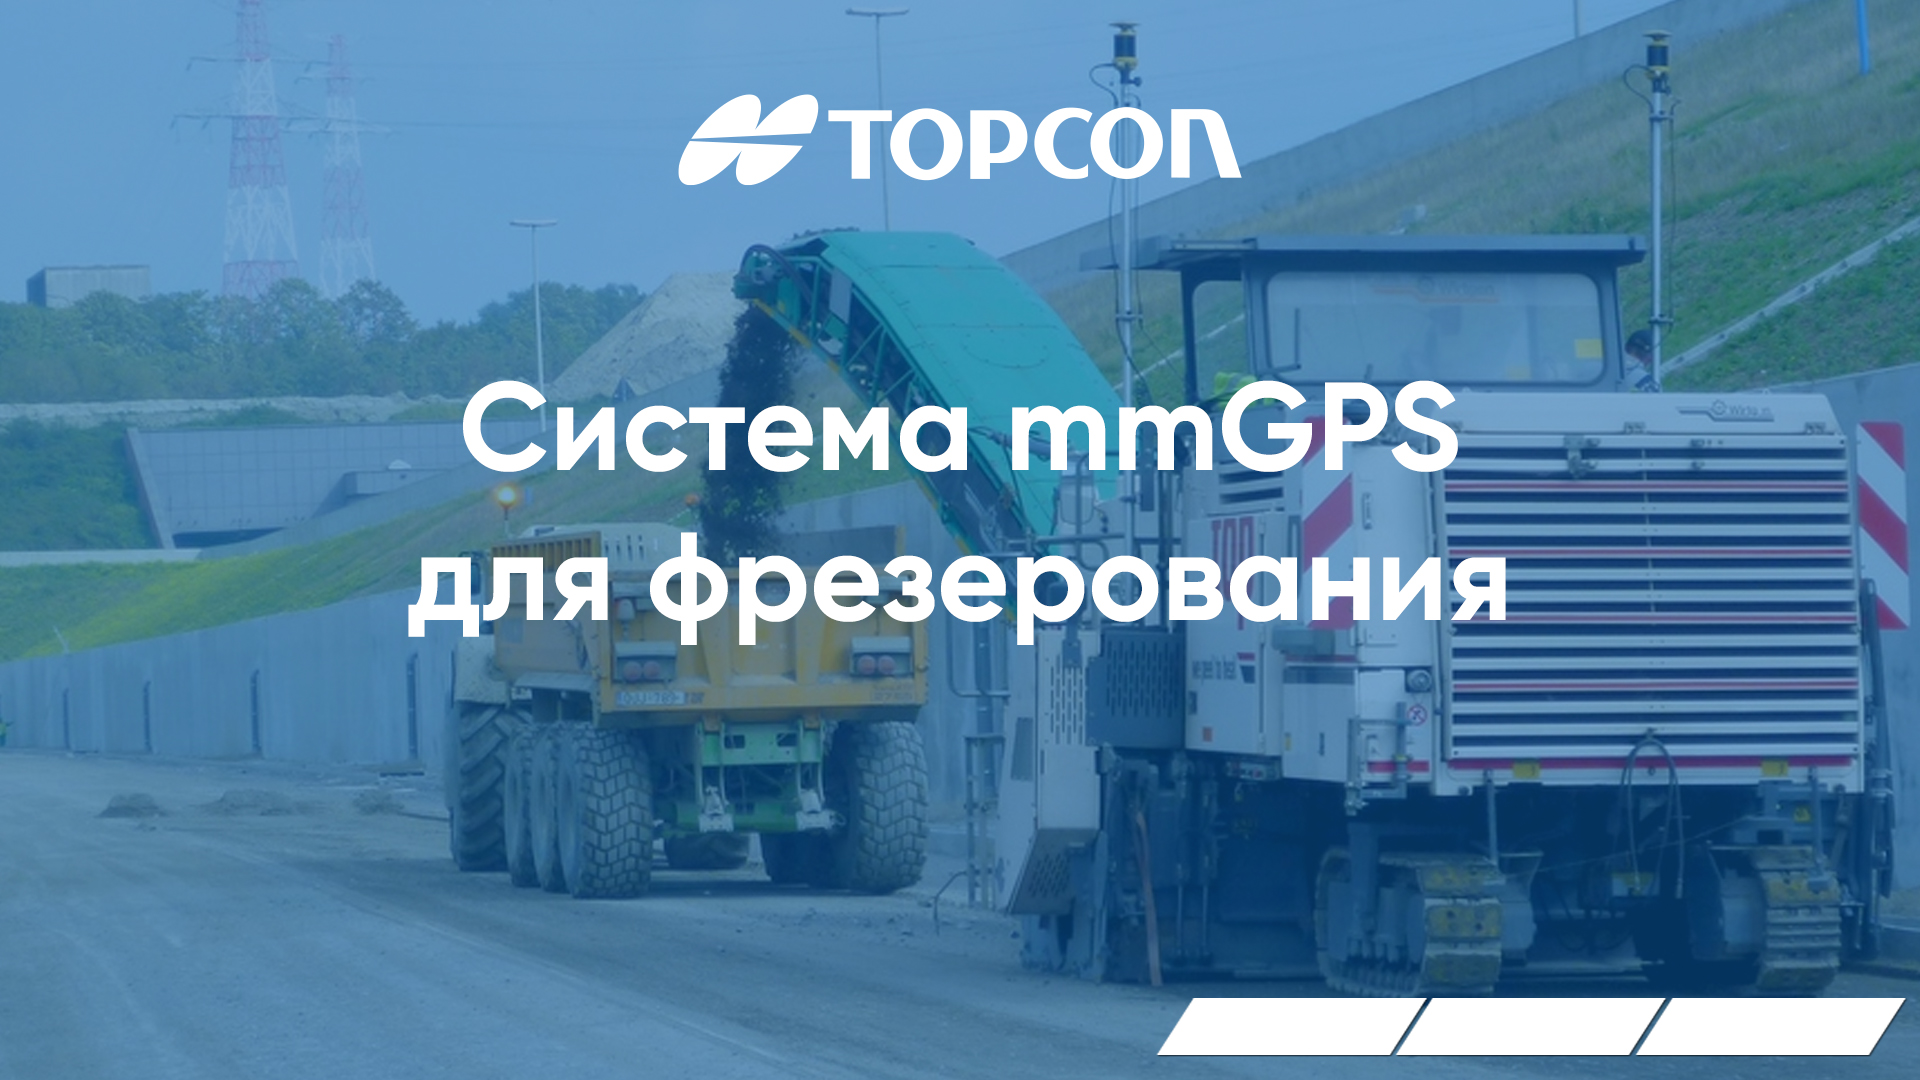 Система Topcon mmGPS для фрезерования